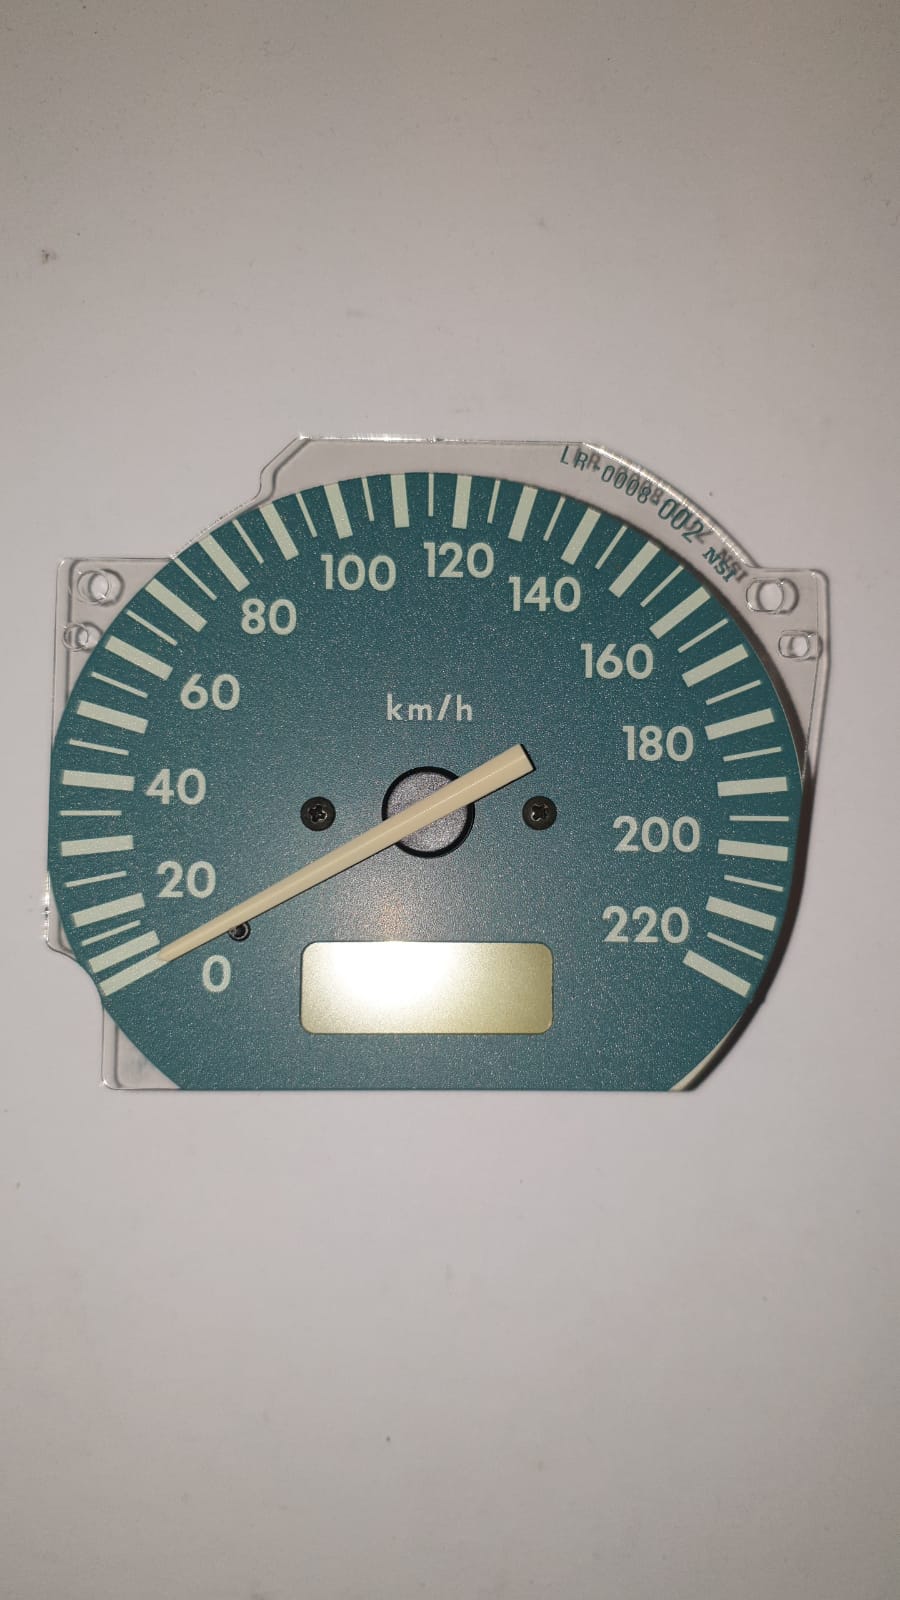 LR-0008-002 Speedometer assy